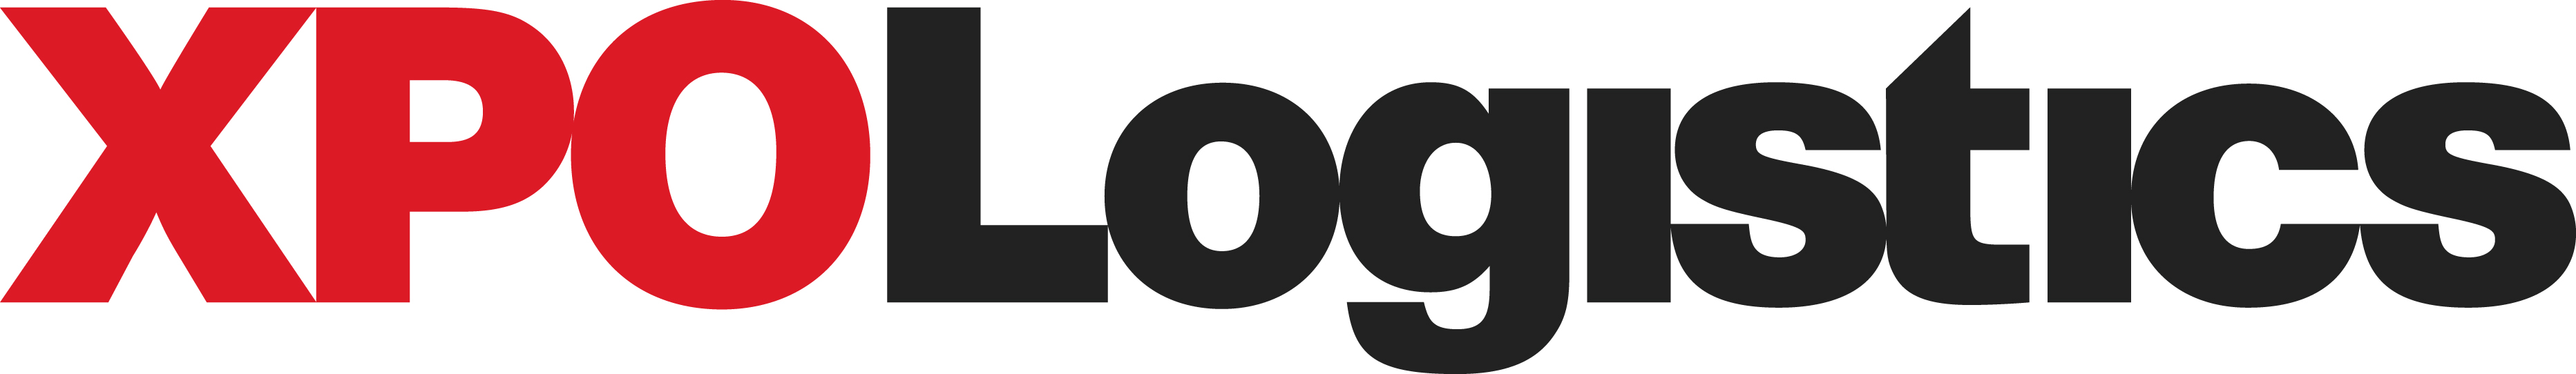 xpo201710-k_logo.jpg